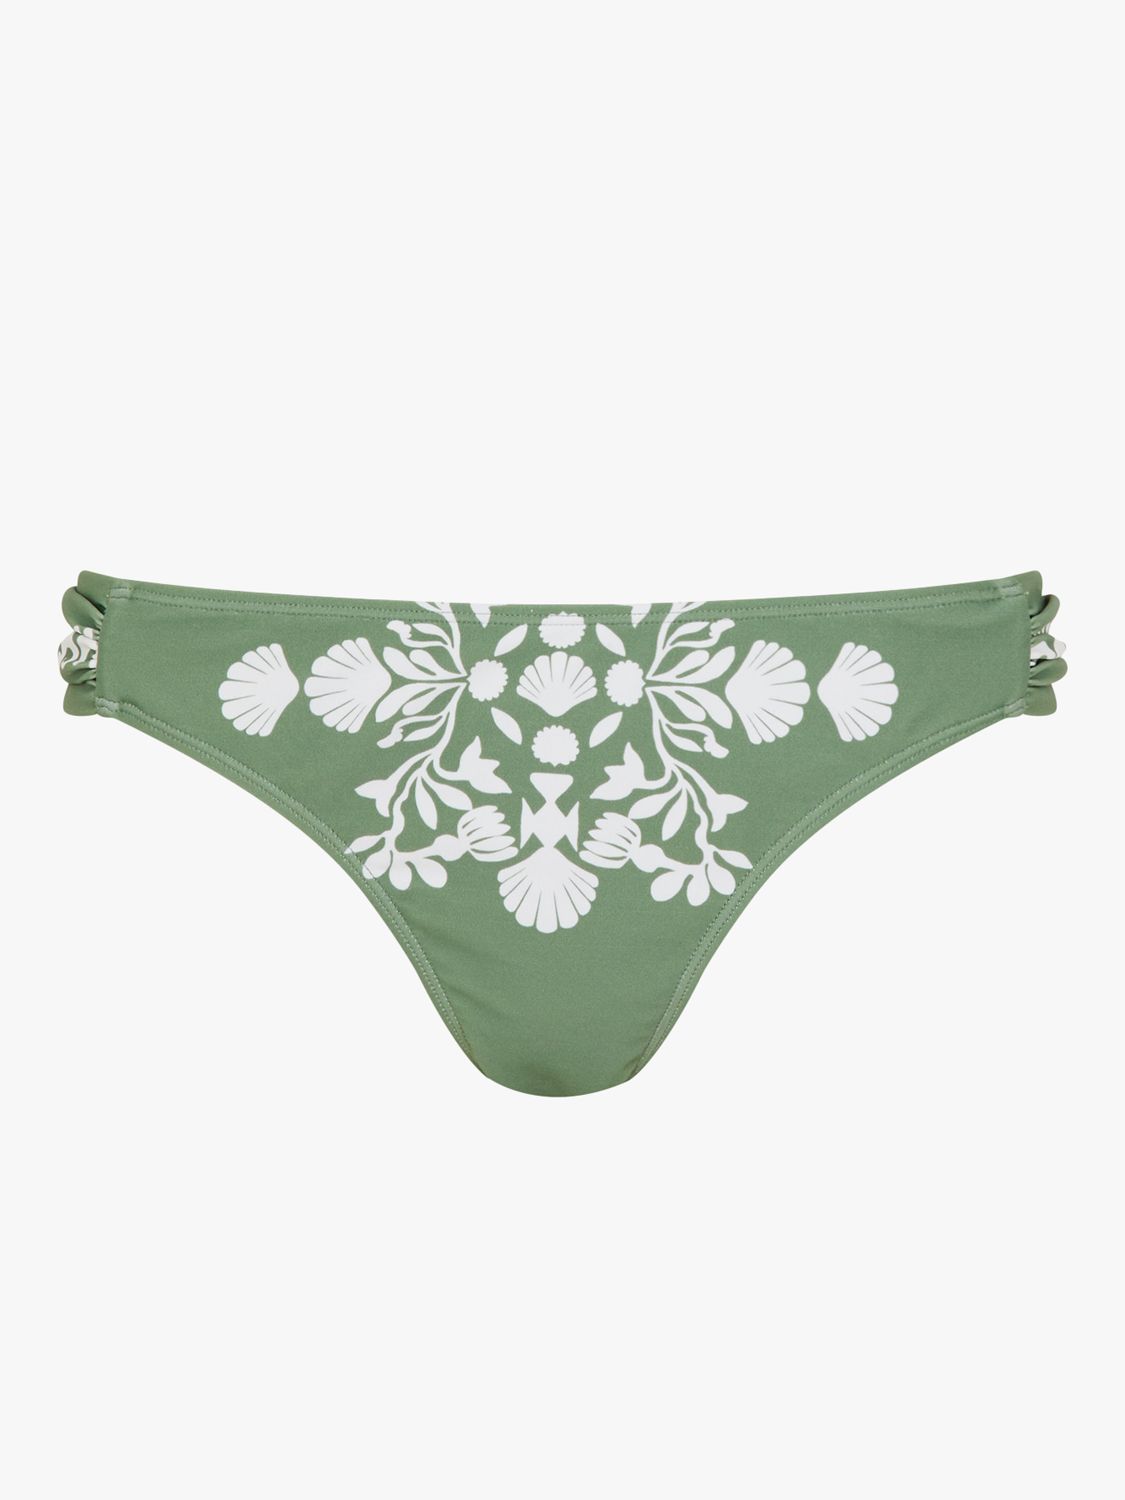 Accessorize Ornamental Print Ruched Side Bikini Bottoms, Khaki, 16